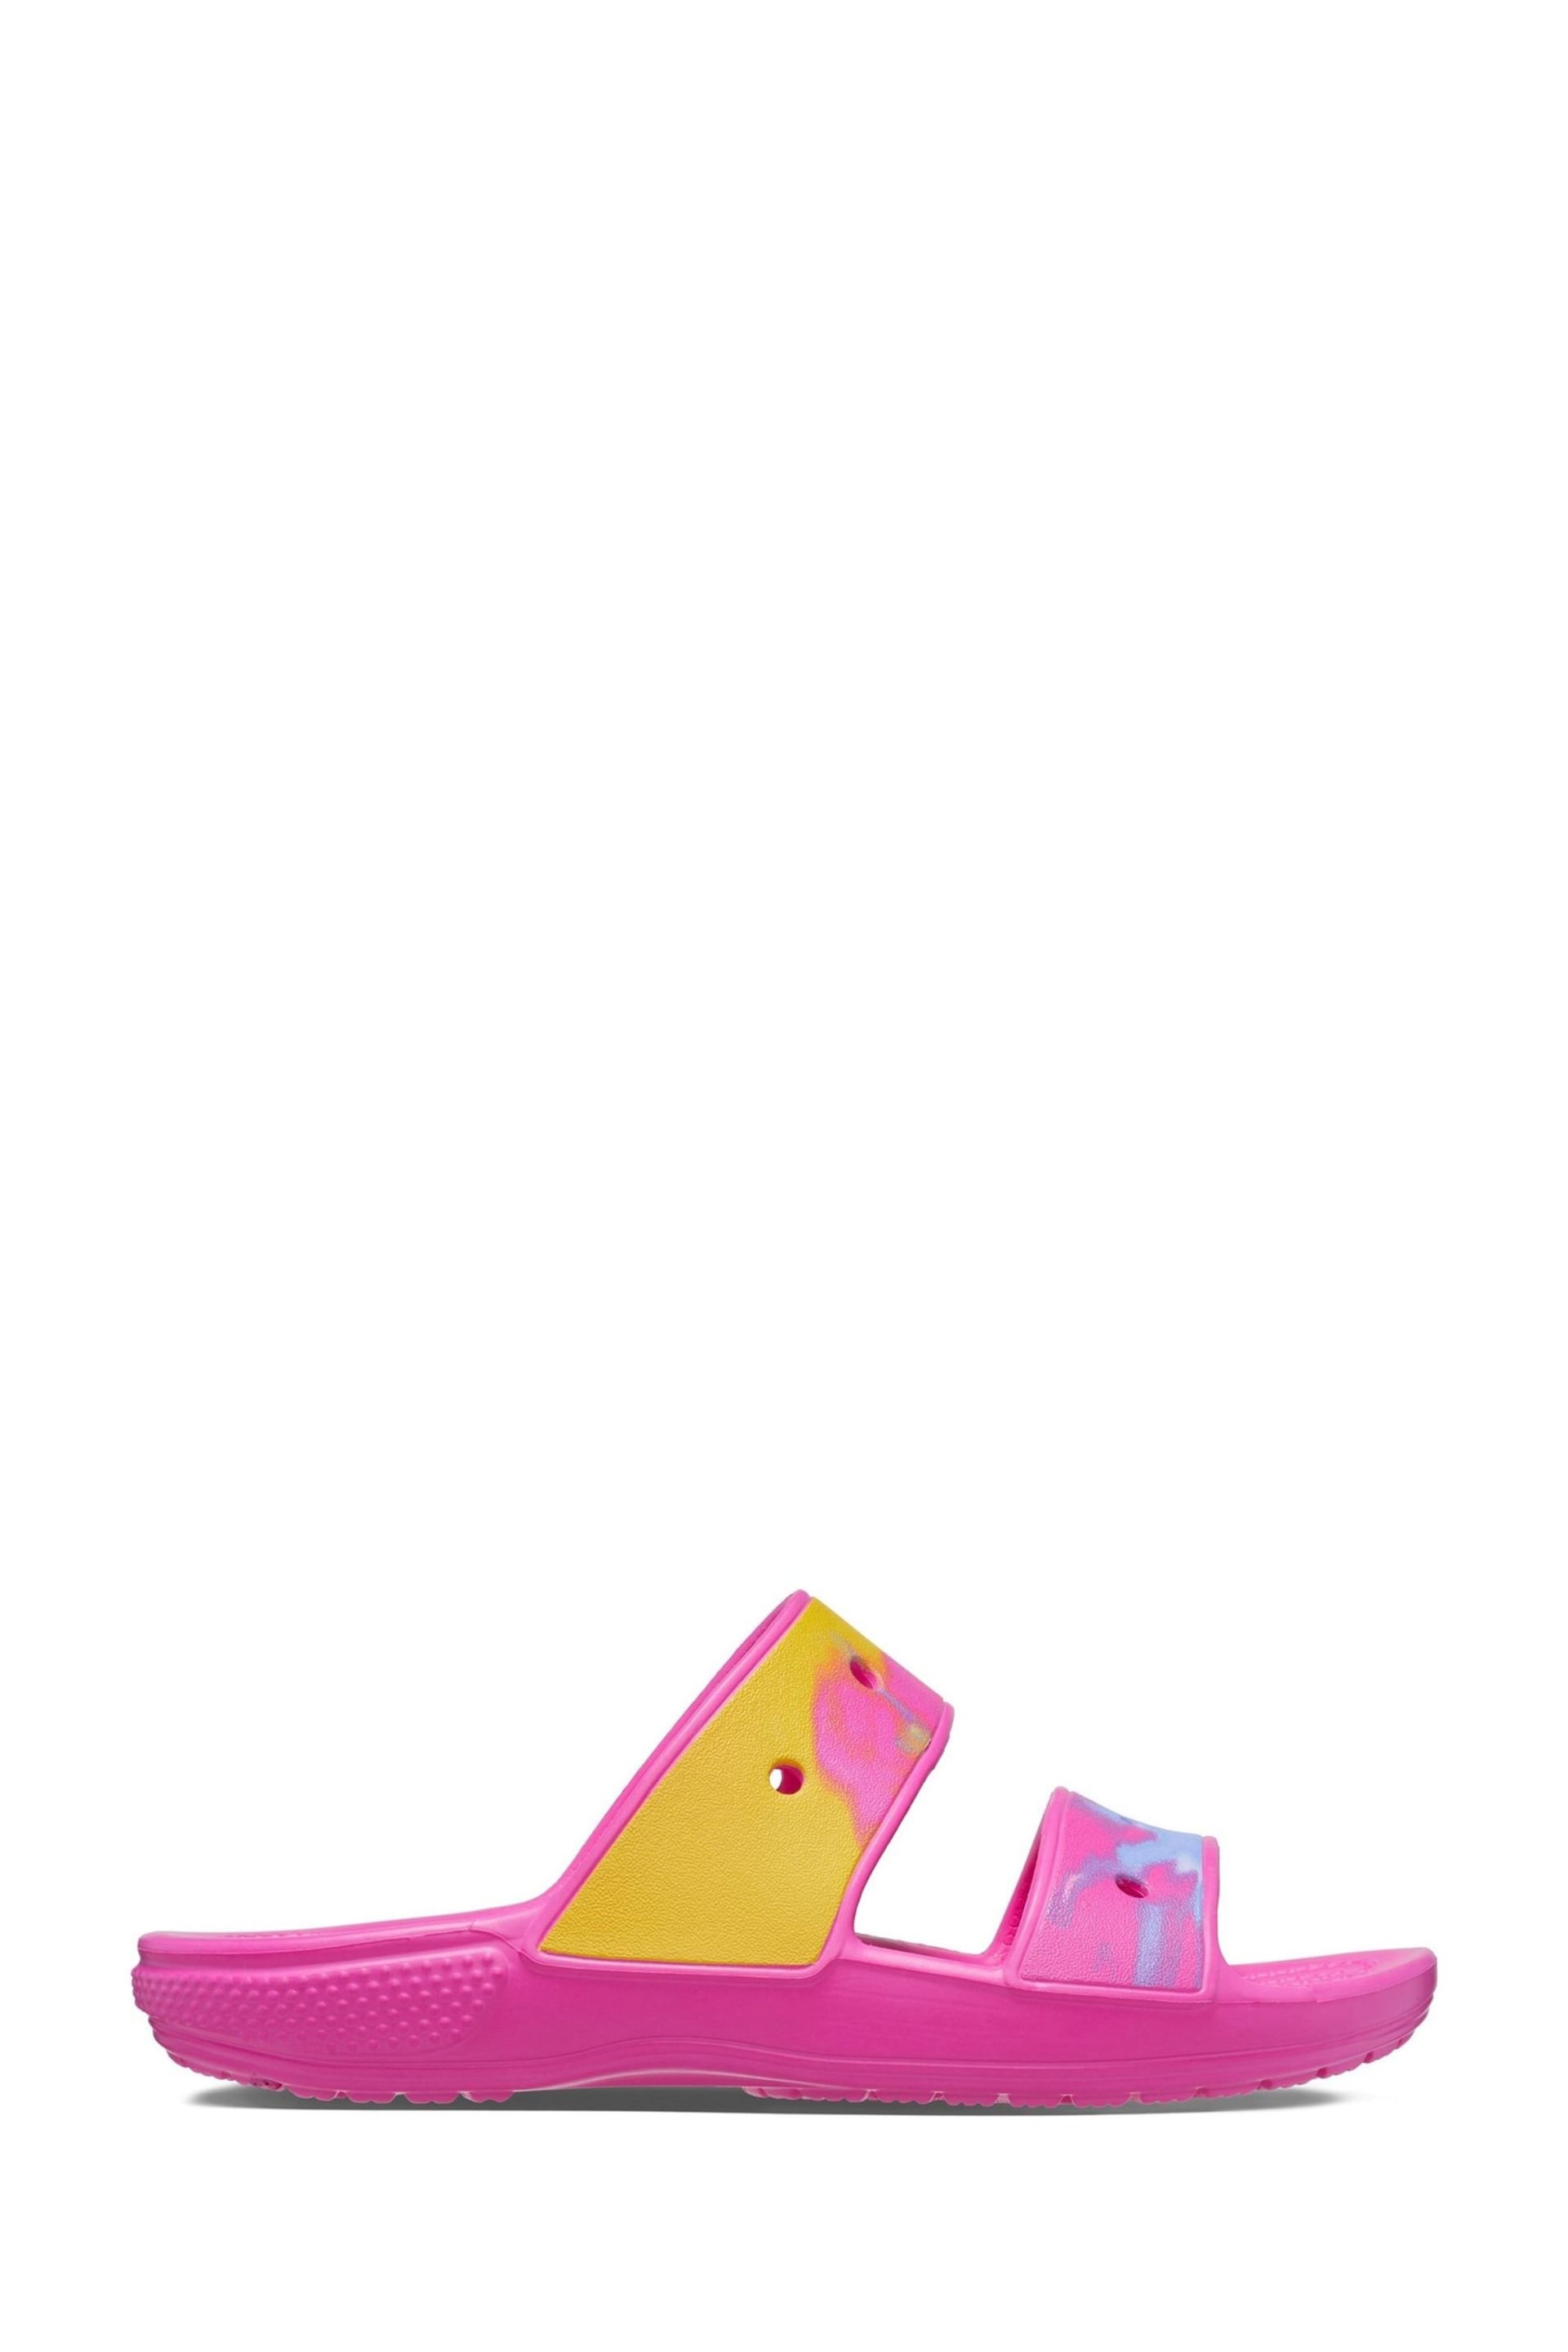 Crocs Pink Classic Ombre Sandals - Image 1 of 5